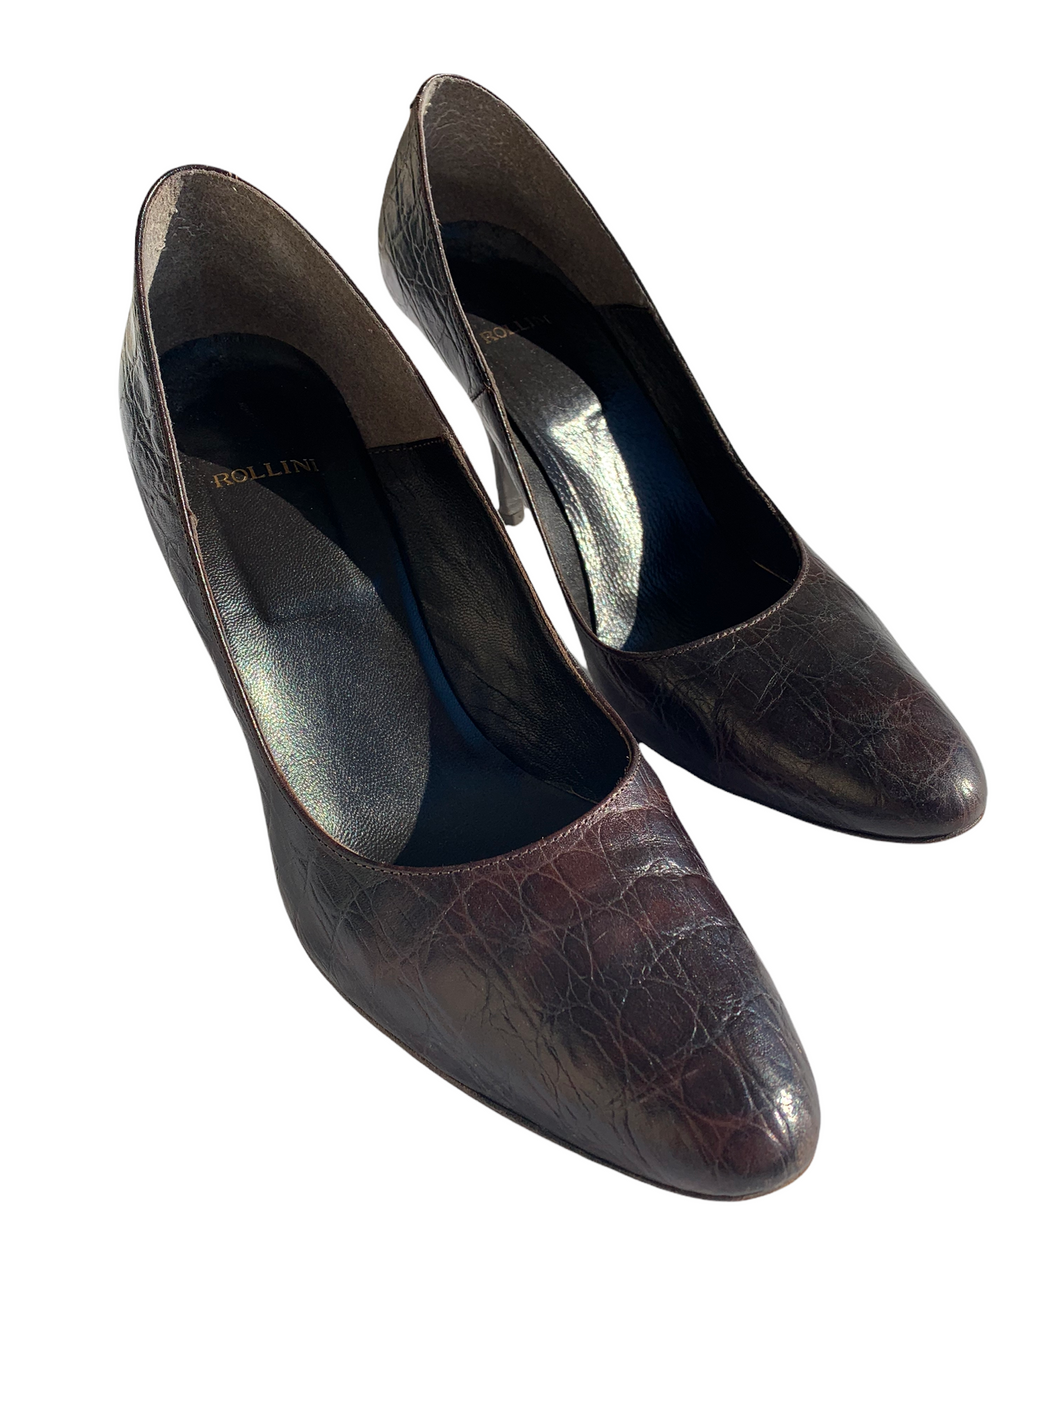 Vintage classic heels